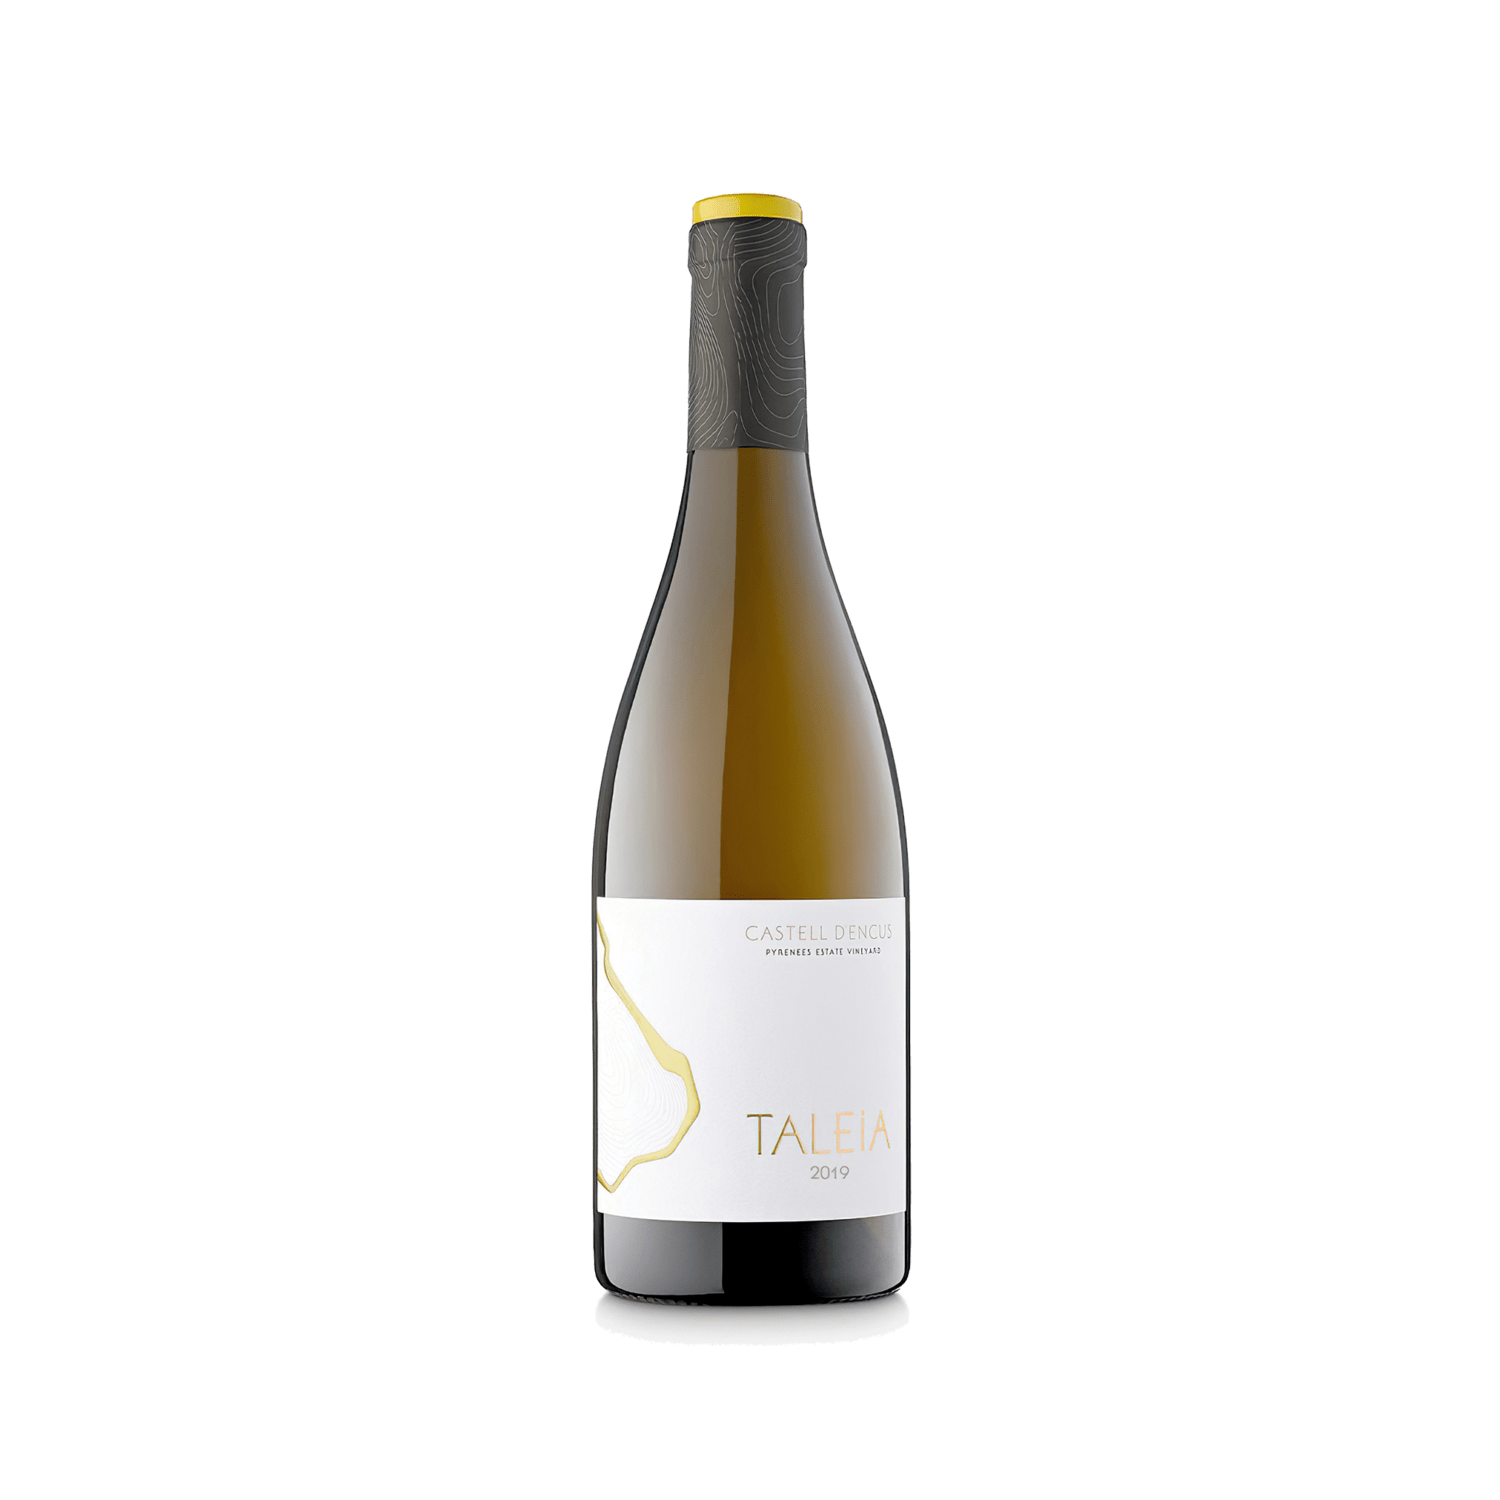 Botella de estudio del vino TALEIA 2019